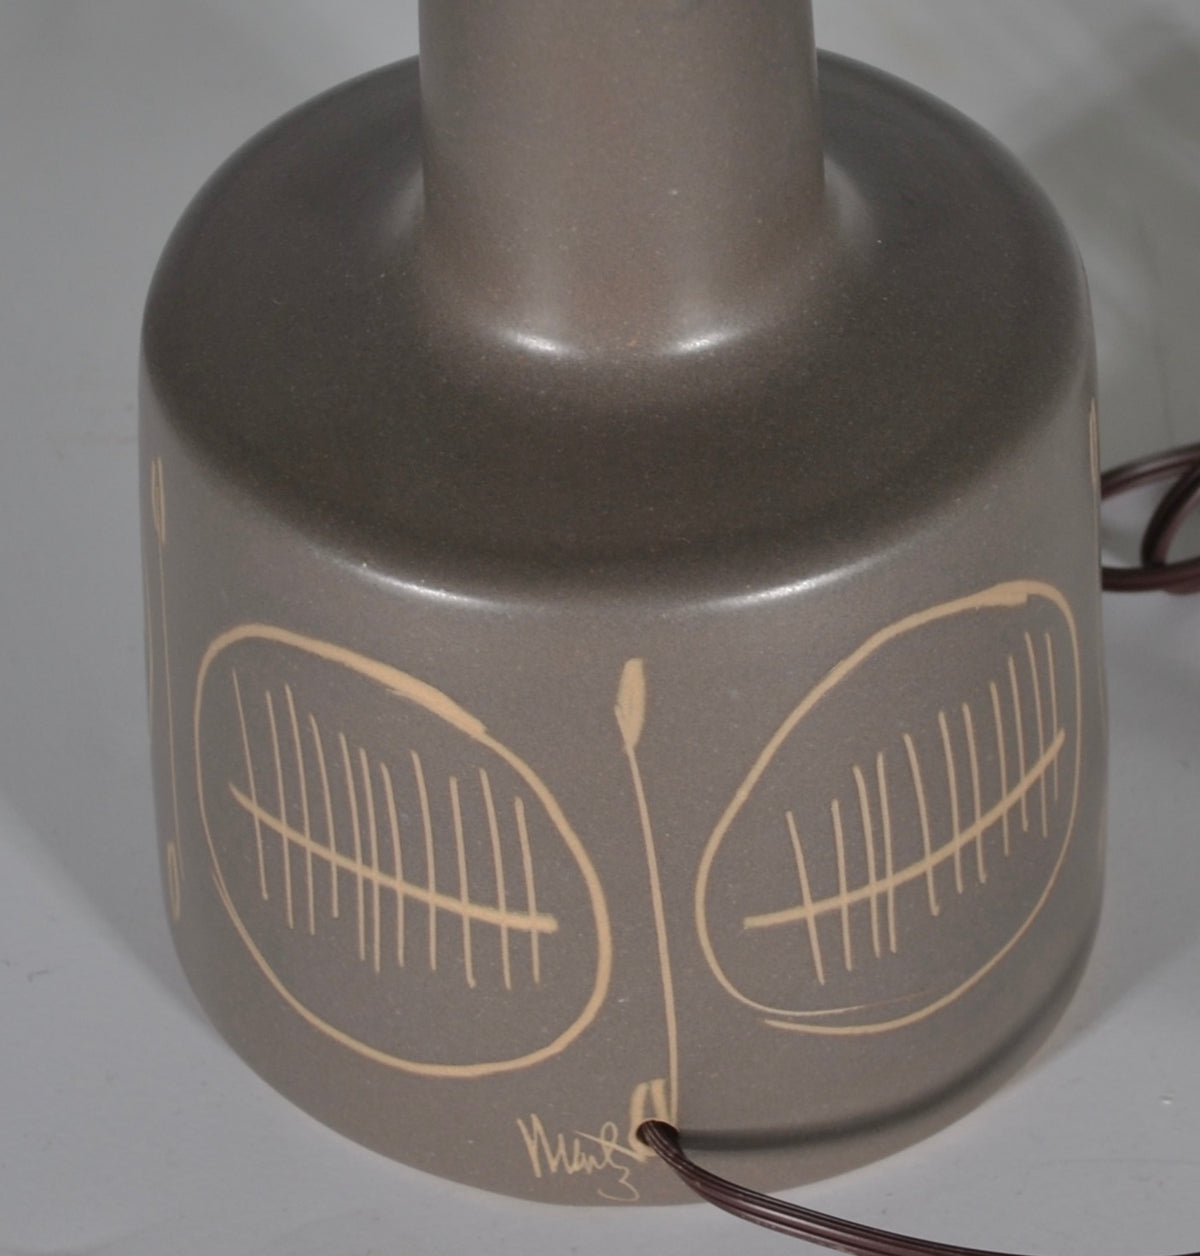 Gordon & Jane Martz - Table Lamp